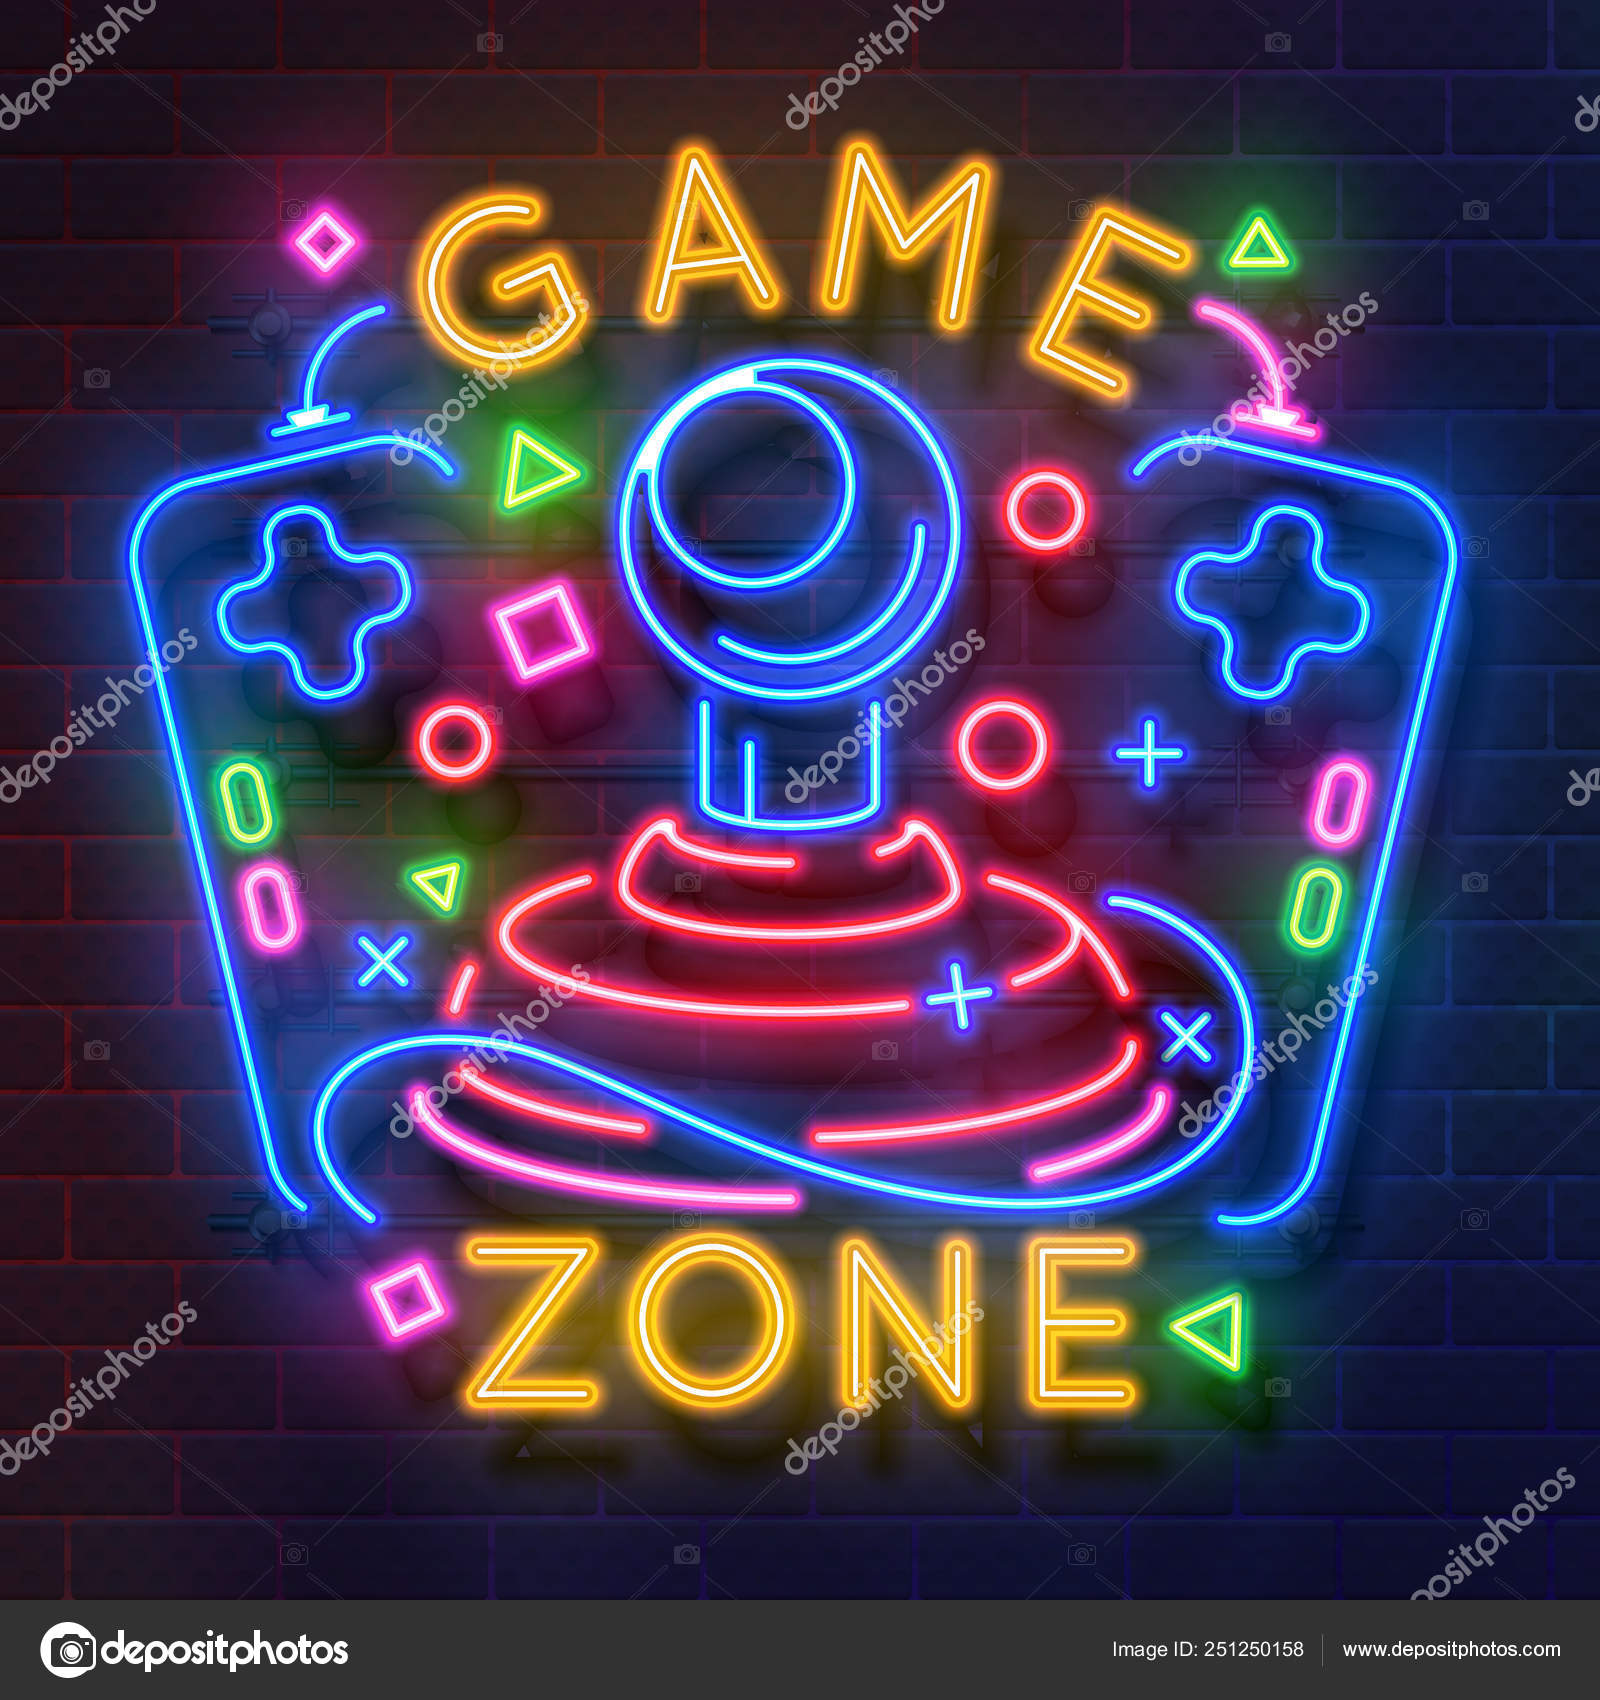 https://st4.depositphotos.com/21121724/25125/v/1600/depositphotos_251250158-stock-illustration-retro-game-neon-sign-video.jpg